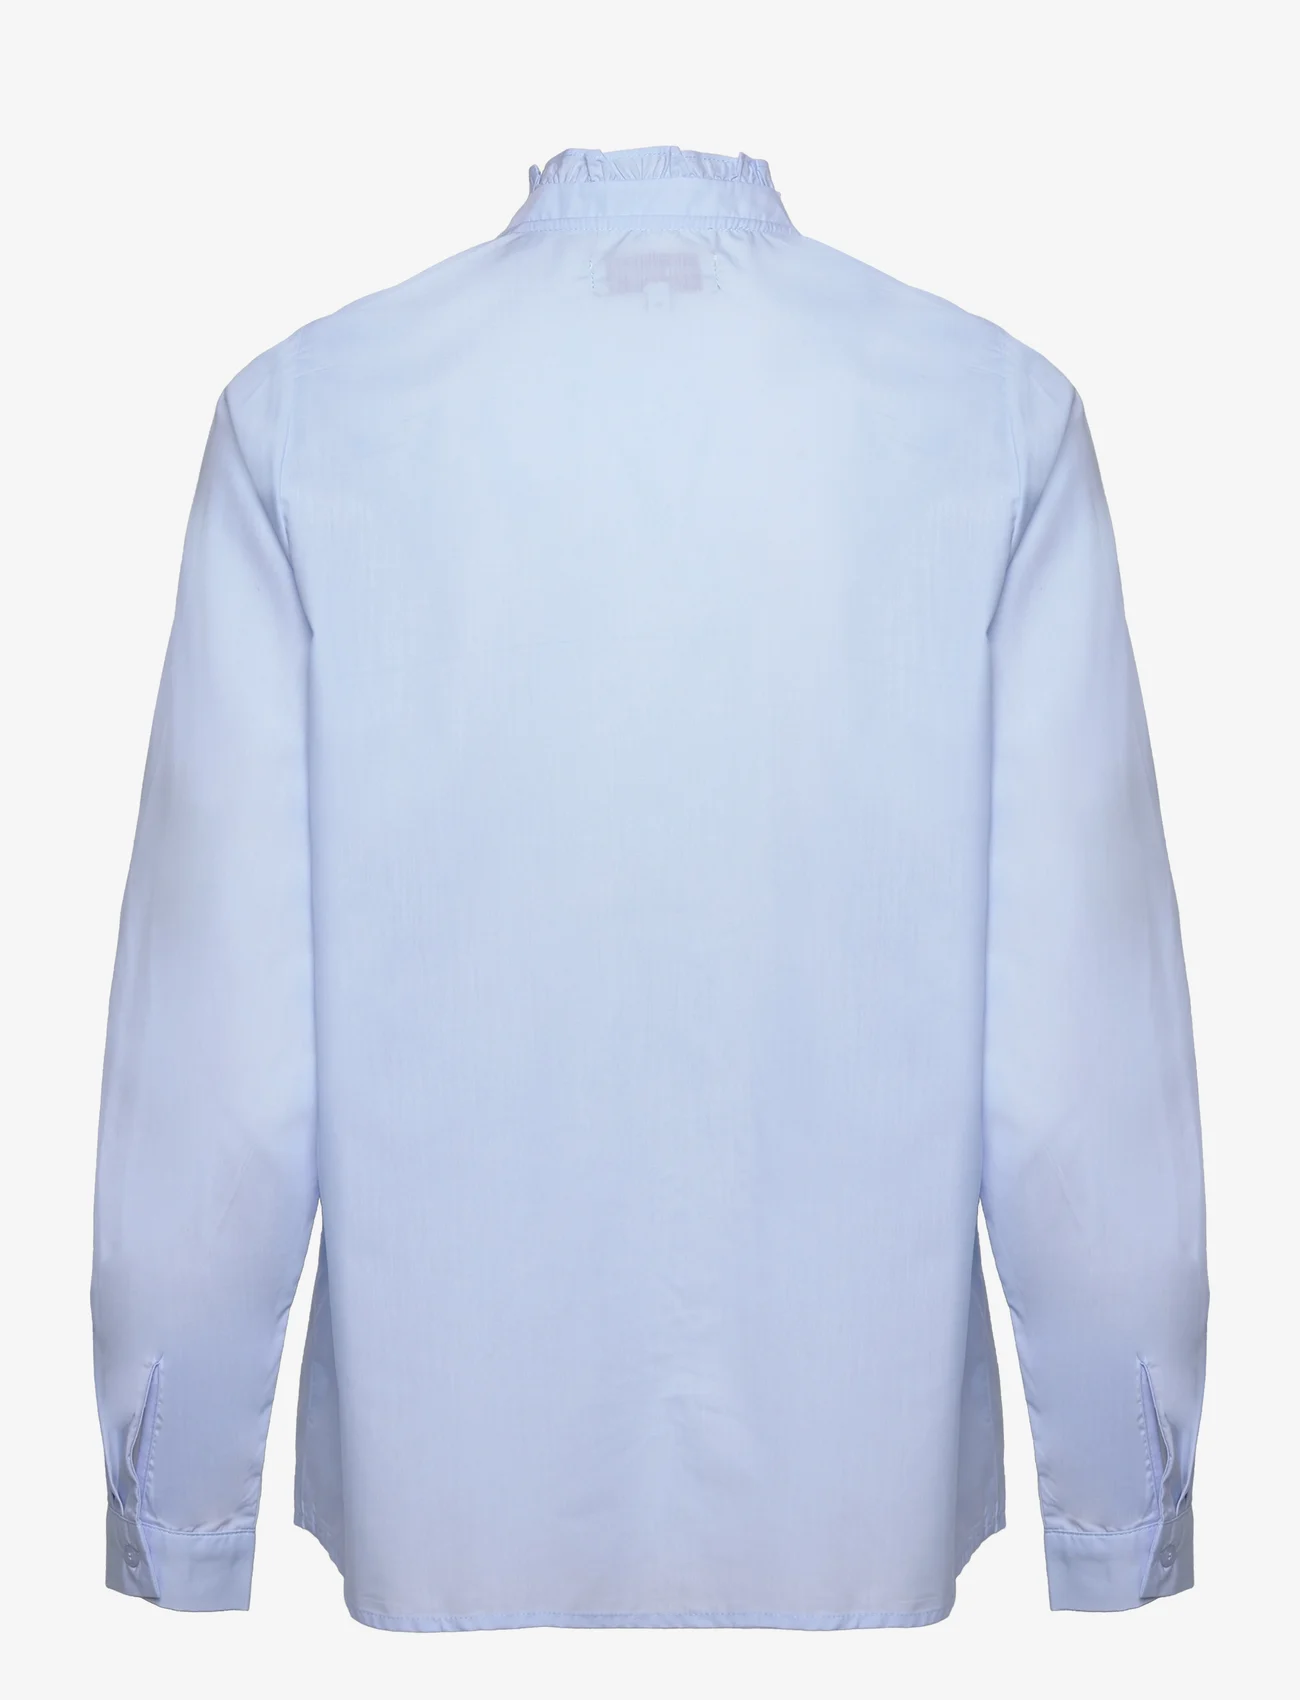 Lollys Laundry - Hobart Shirt - pitkähihaiset paidat - 22 light blue - 1